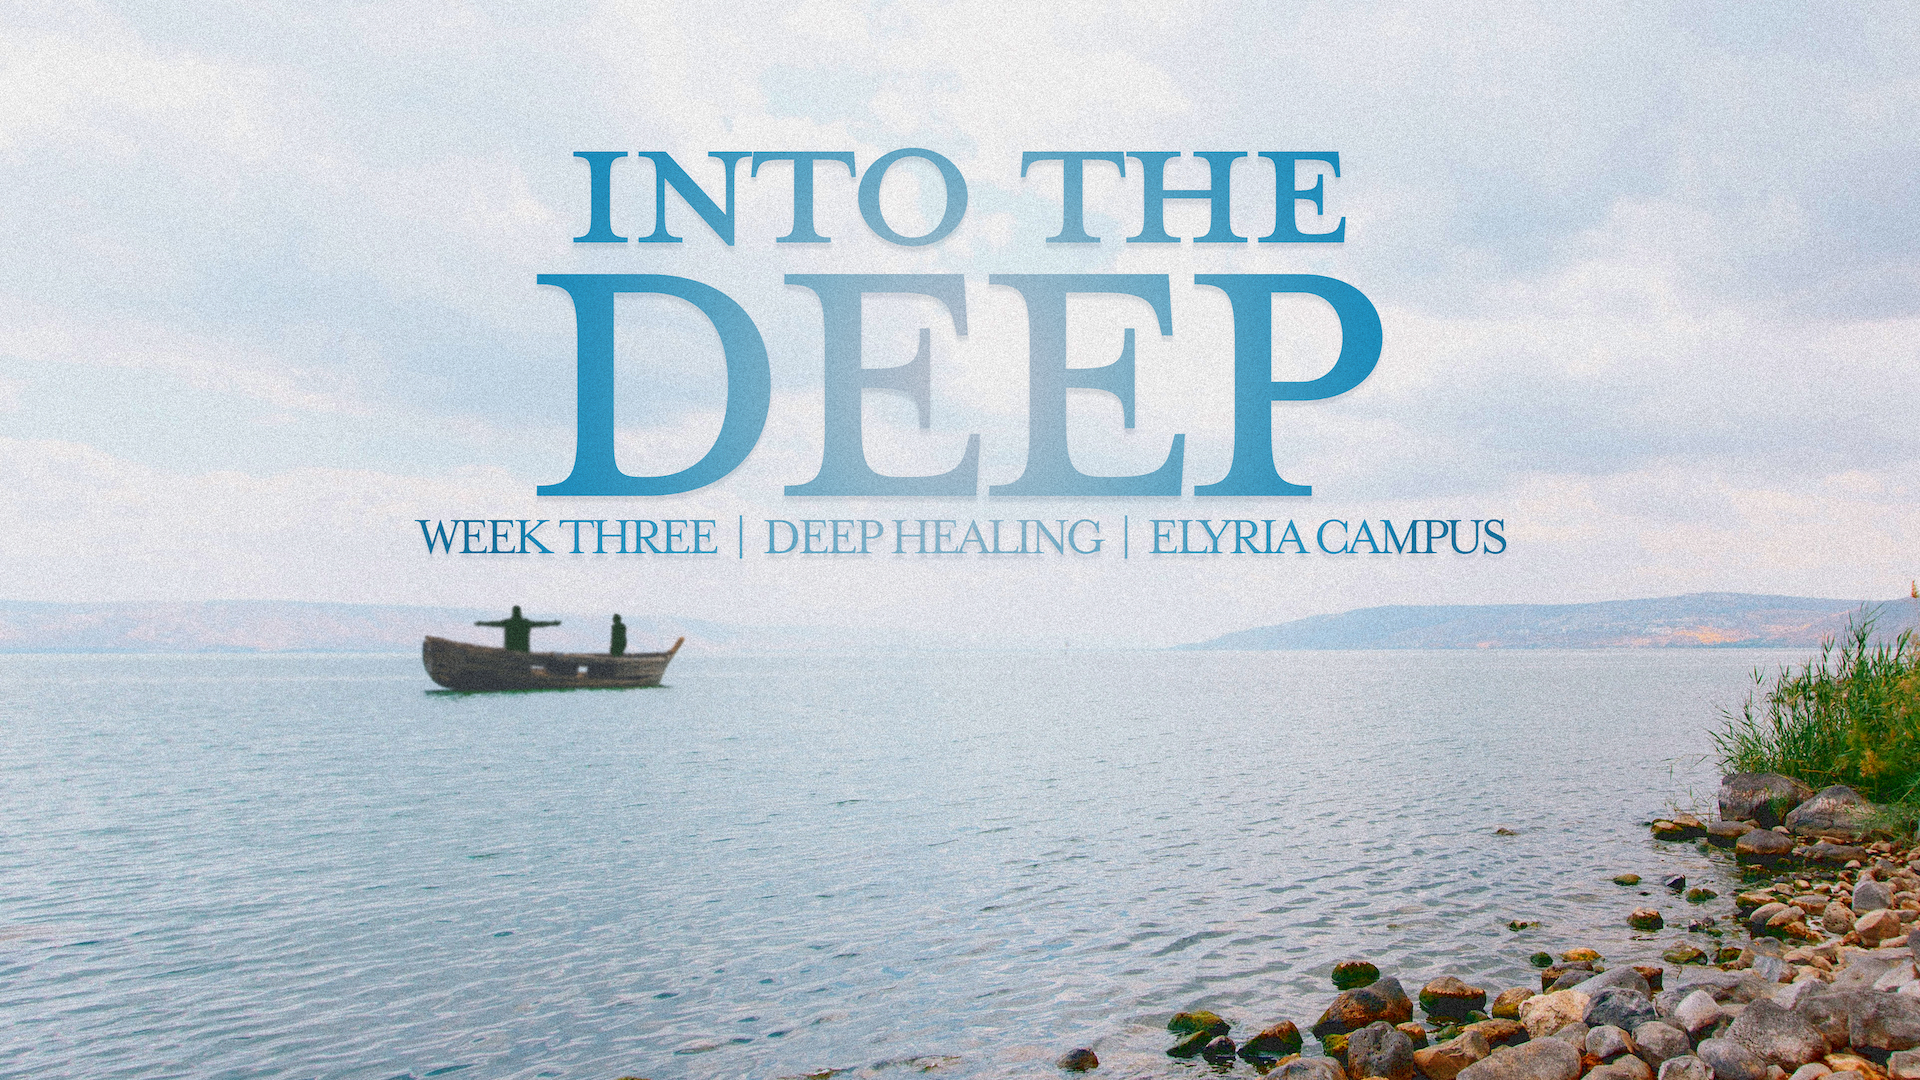 Deep Healing - Week Three (Elyria Campus)